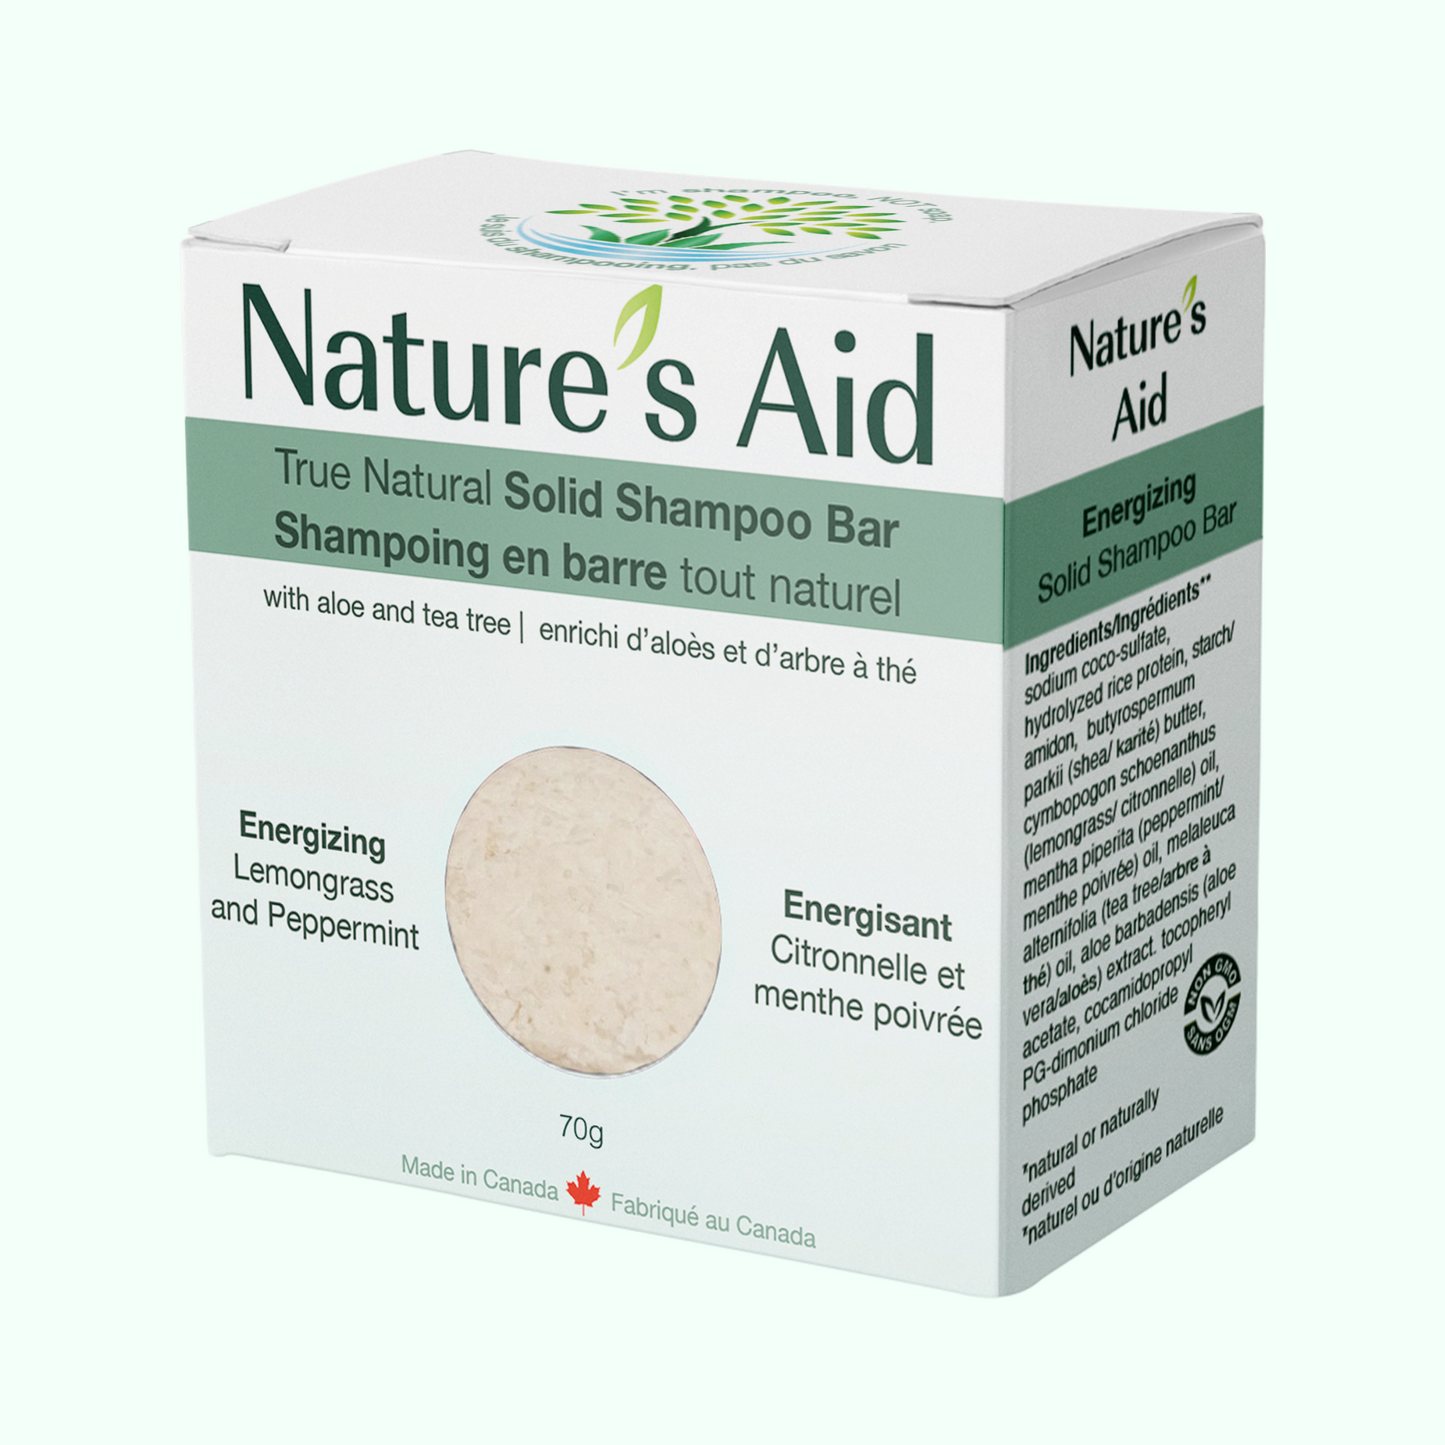 Nature's Aid Lemongrass & Peppermint Solid Shampoo Bar